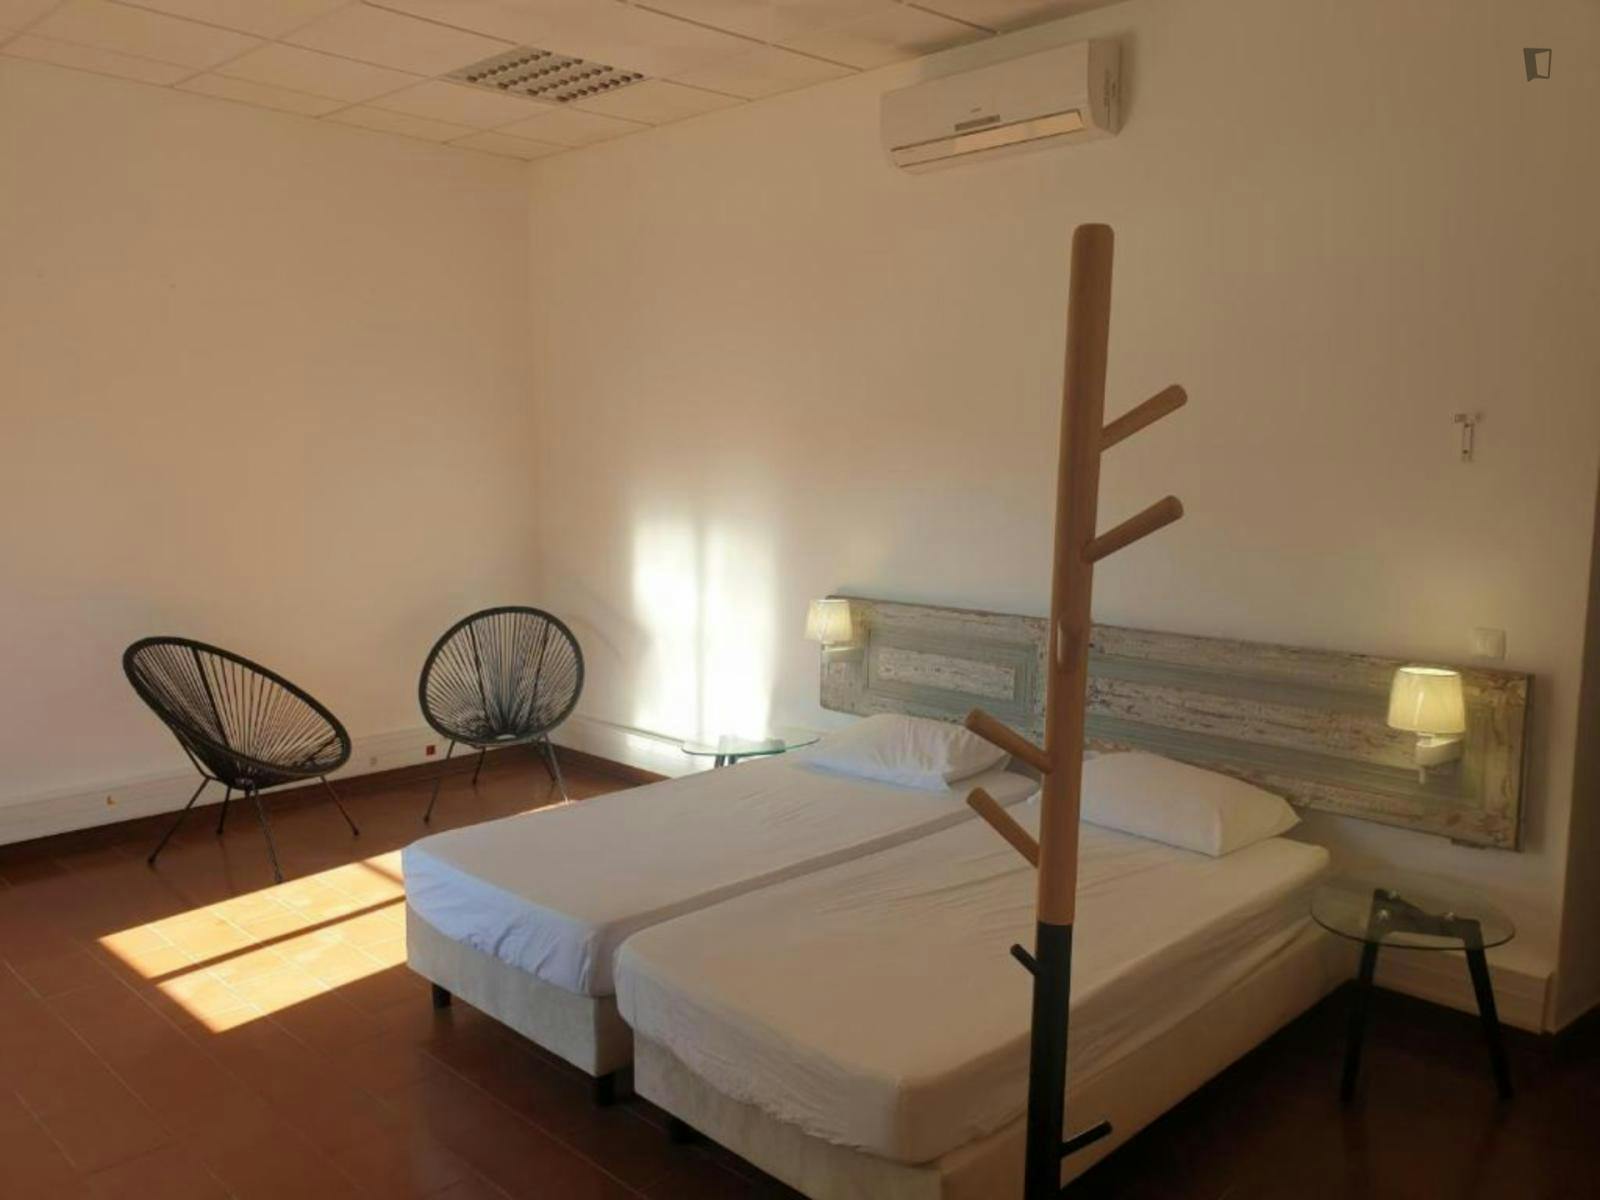 MEIA-PRAIA - Nice twin bedroom close to Tunes train station